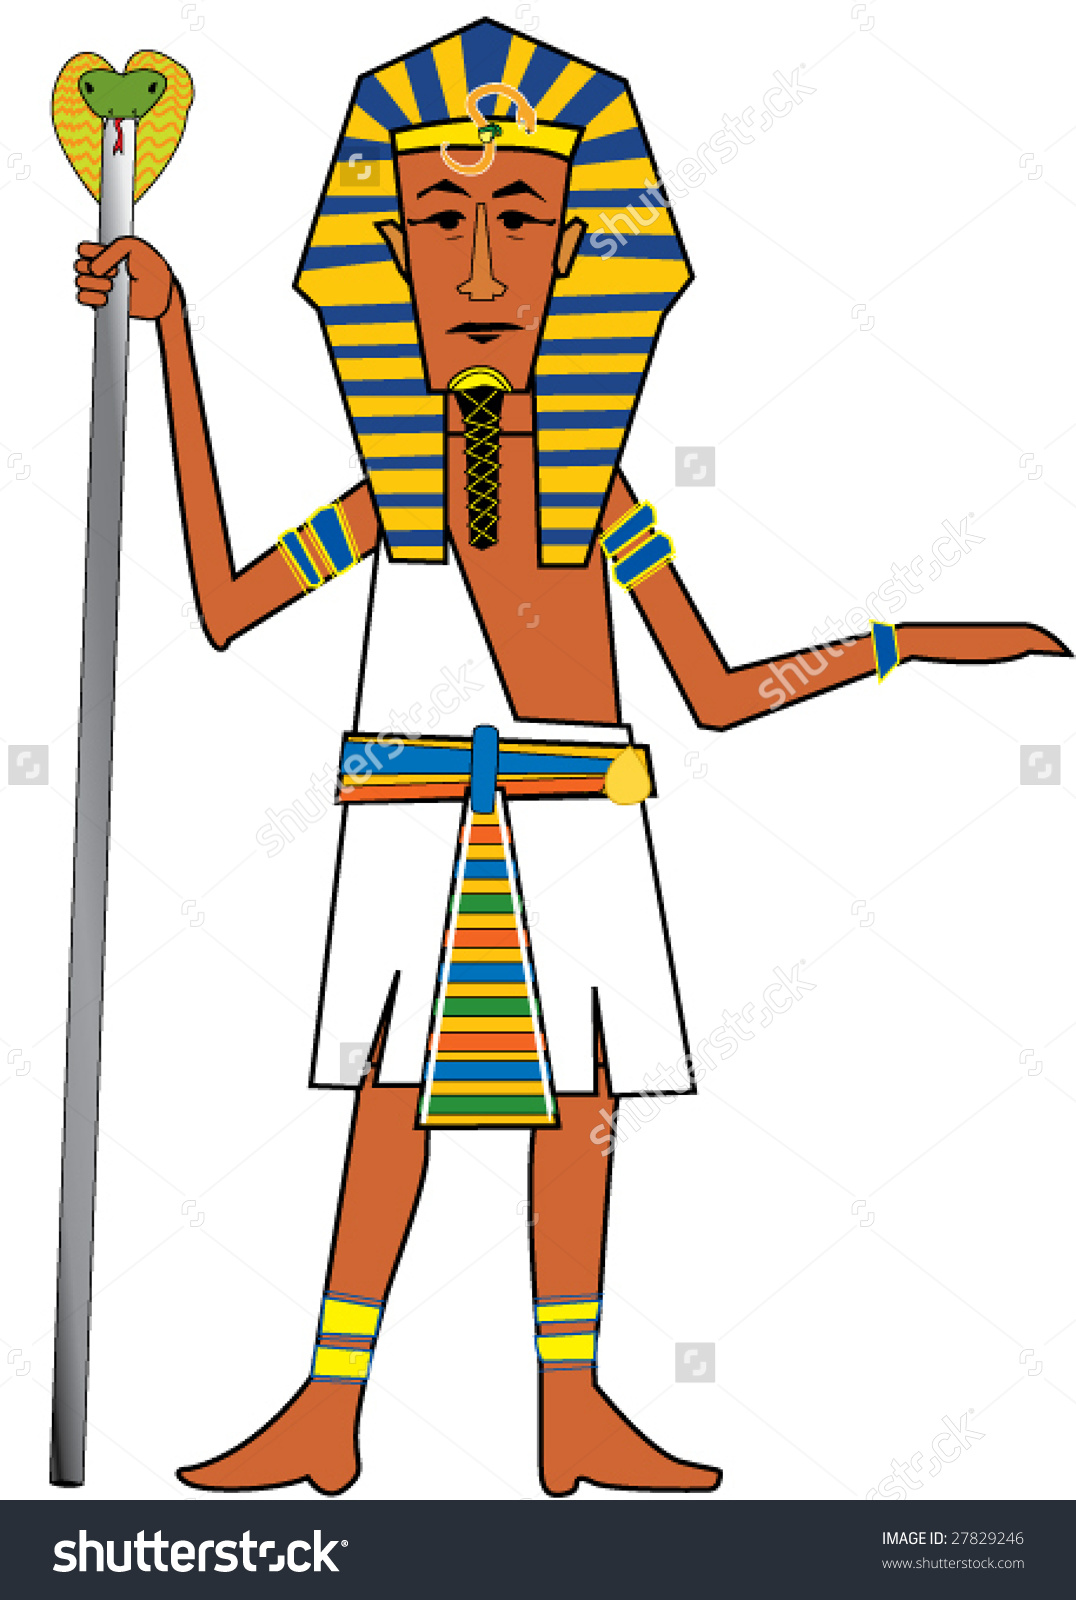 Coloring page Tutankhamun